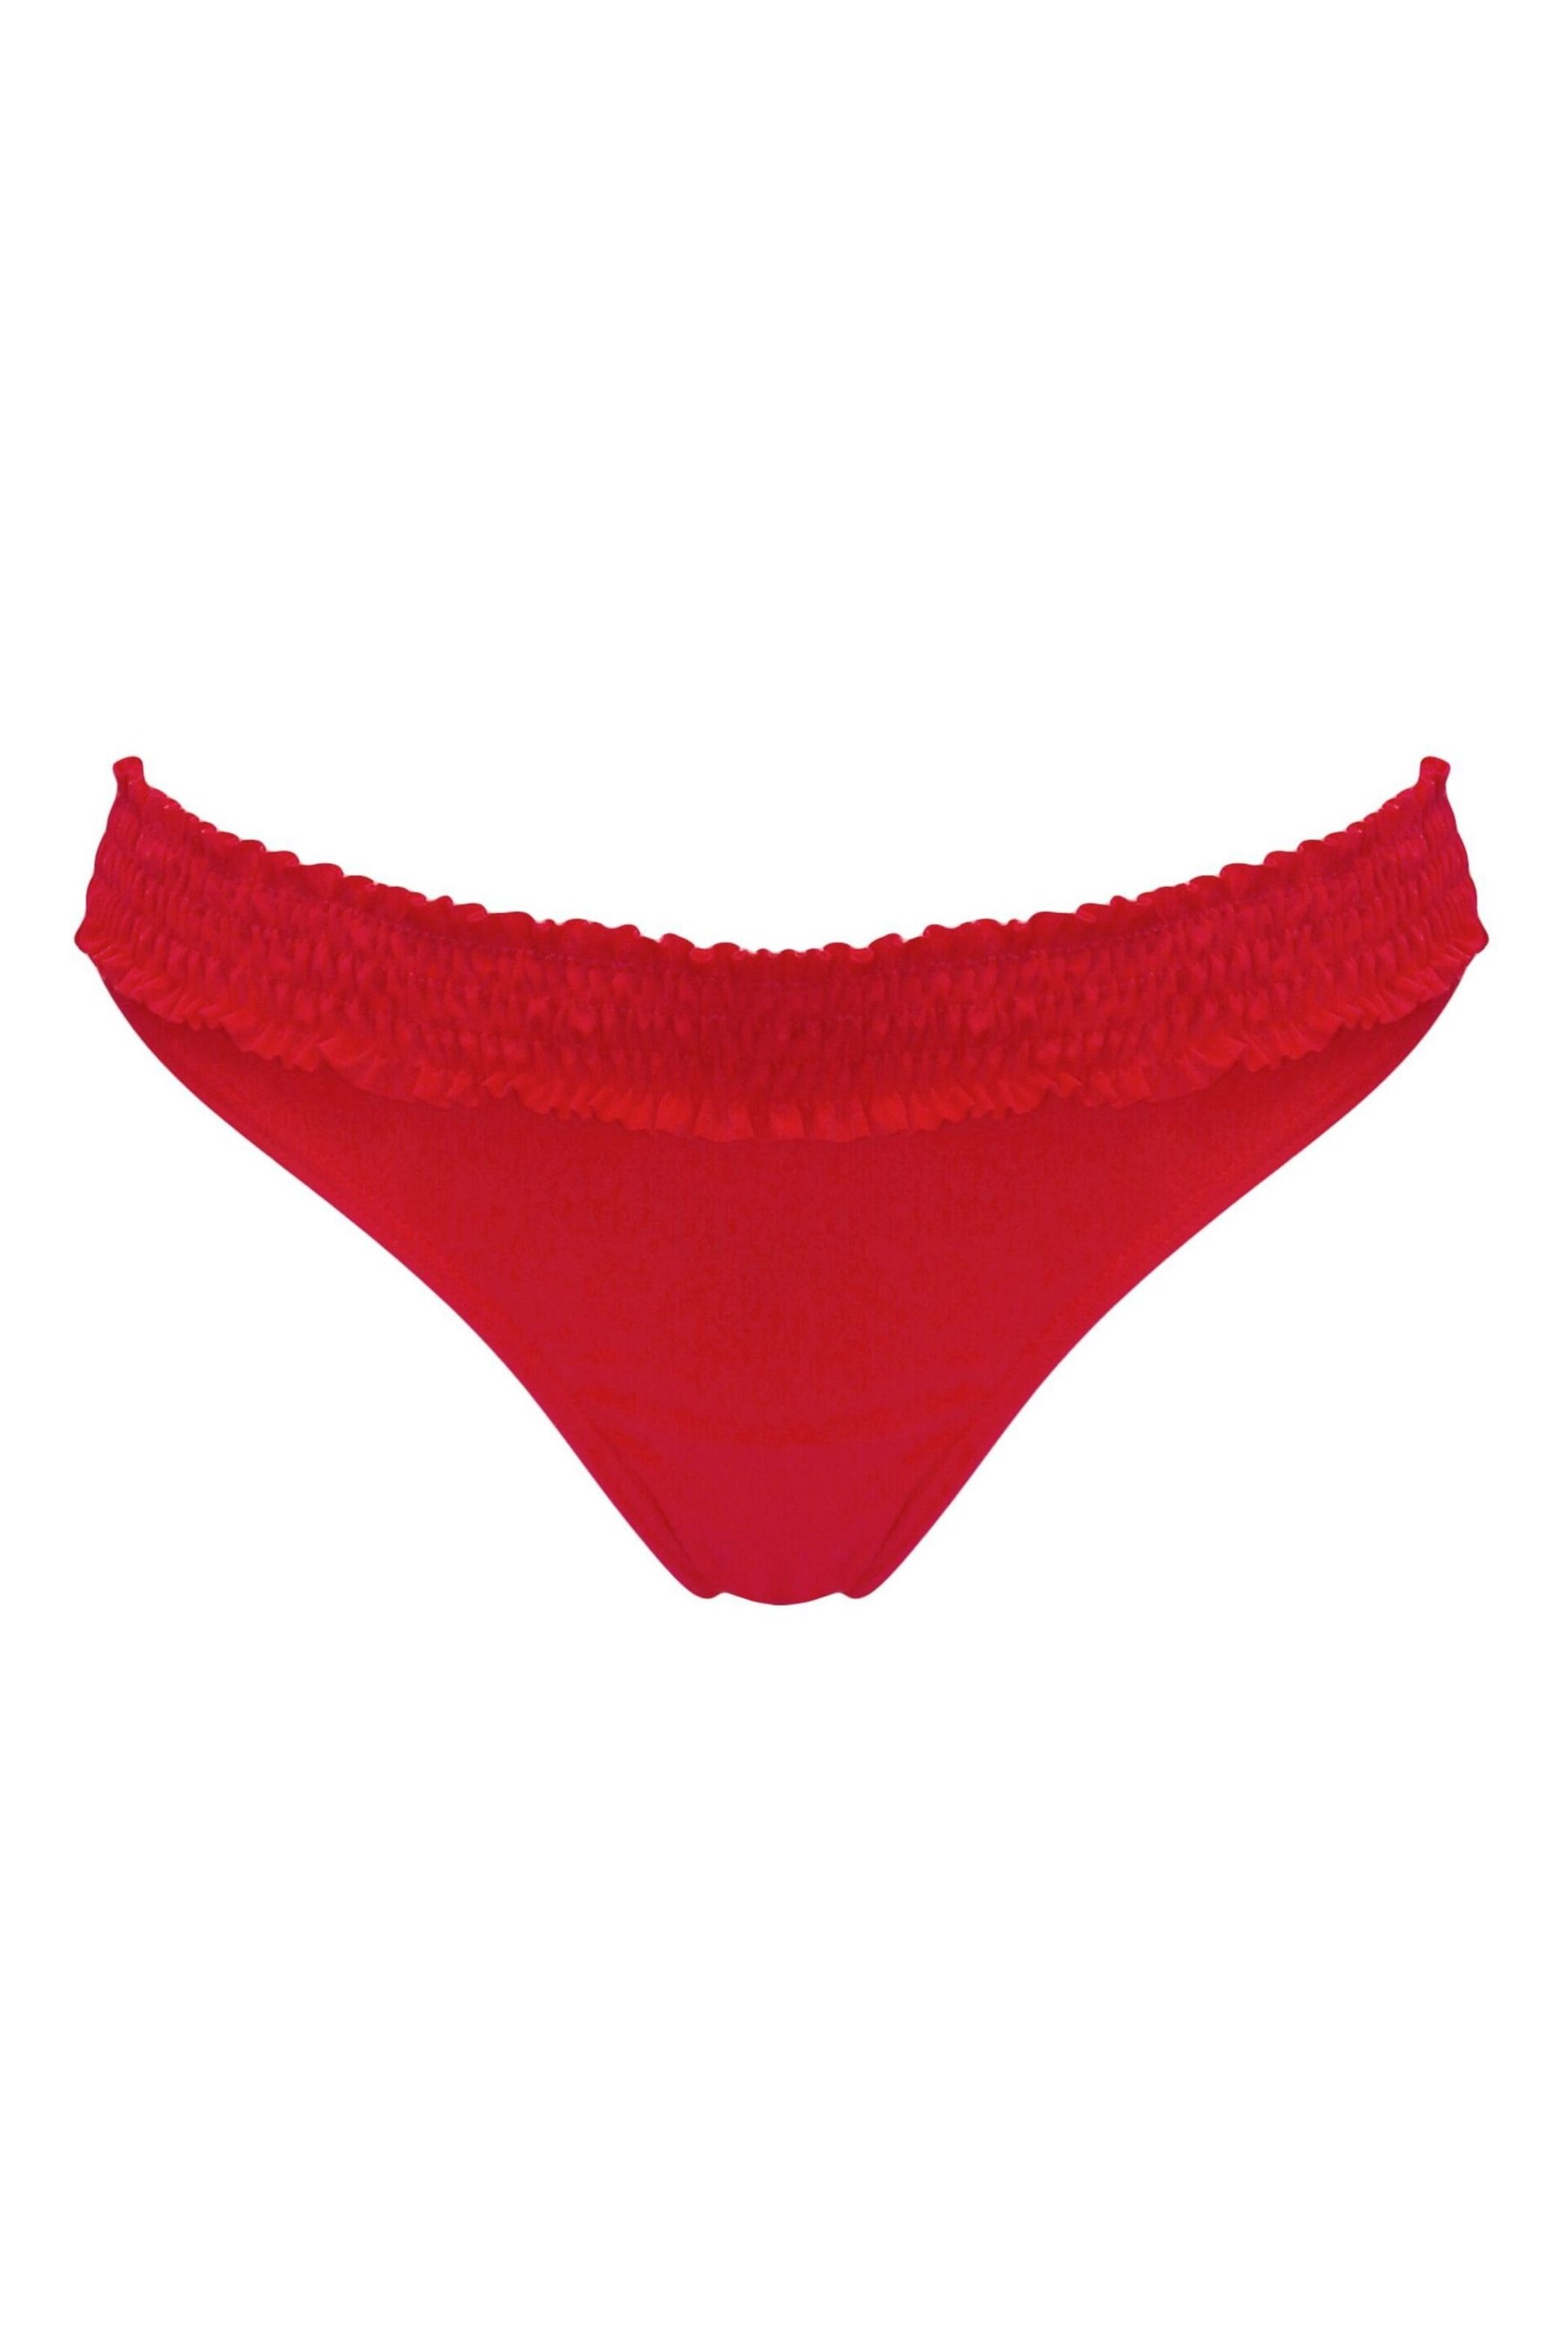 Pour Moi Red Free Spirit Frill Waist Bikini Briefs - Image 3 of 4